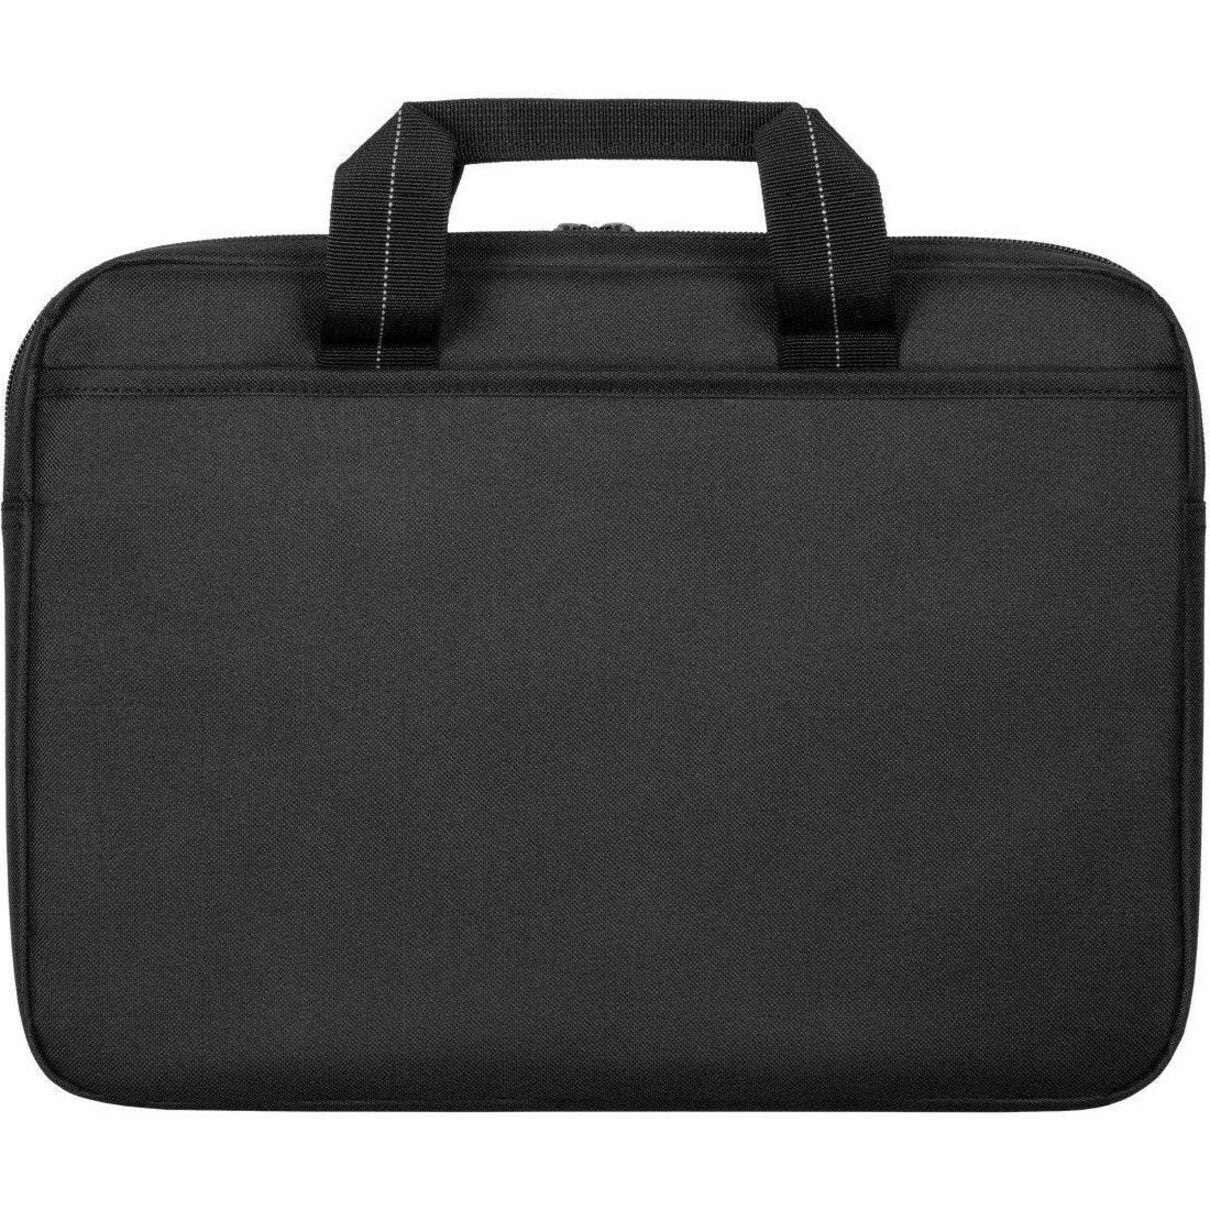 Targus Slipskin TSS932 Carrying Case (Sleeve) for 14" Notebook - Black - TAA Compliant